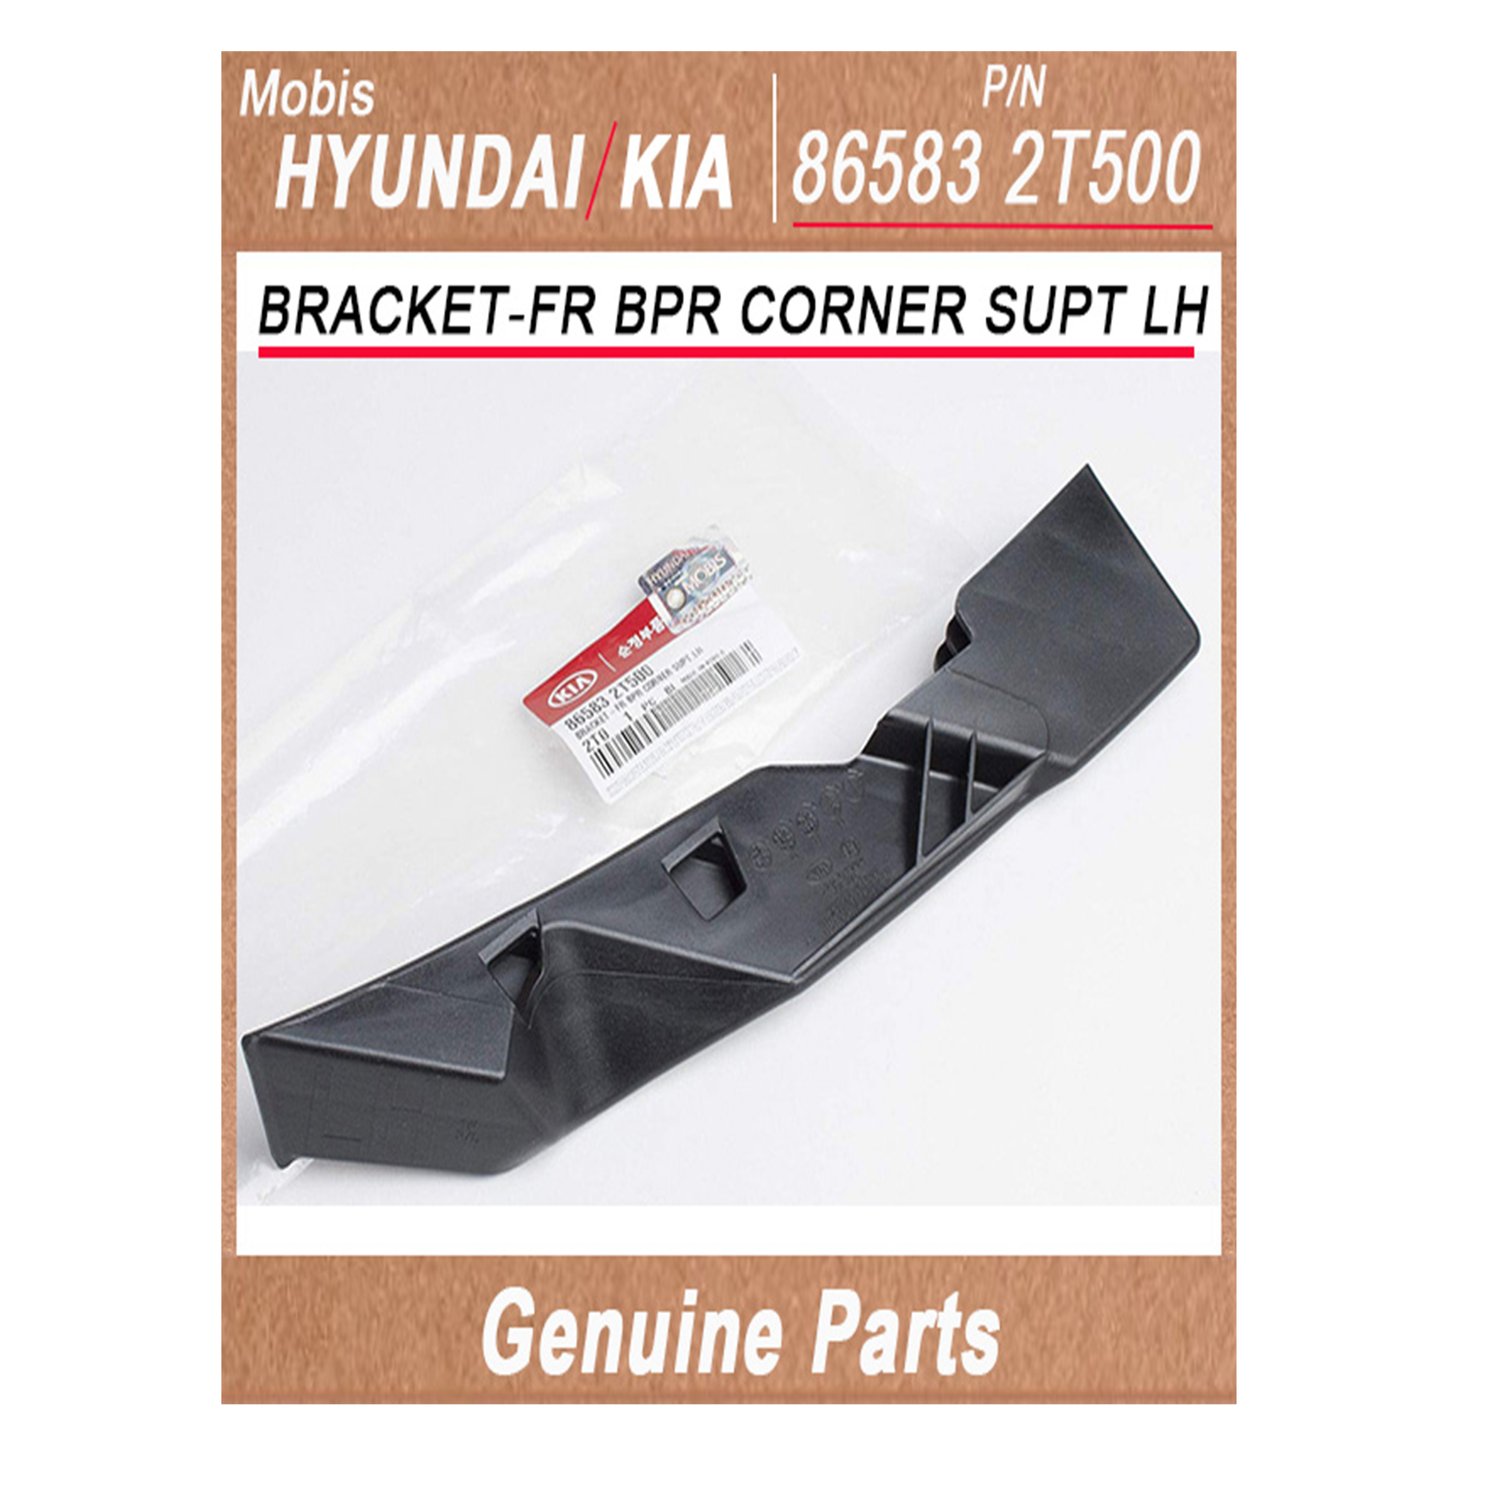 865832T500 _ BRACKET_FR BPR CORNER SUPT LH _ Genuine Korean Automotive Spare Parts _ Hyundai Kia _Mo